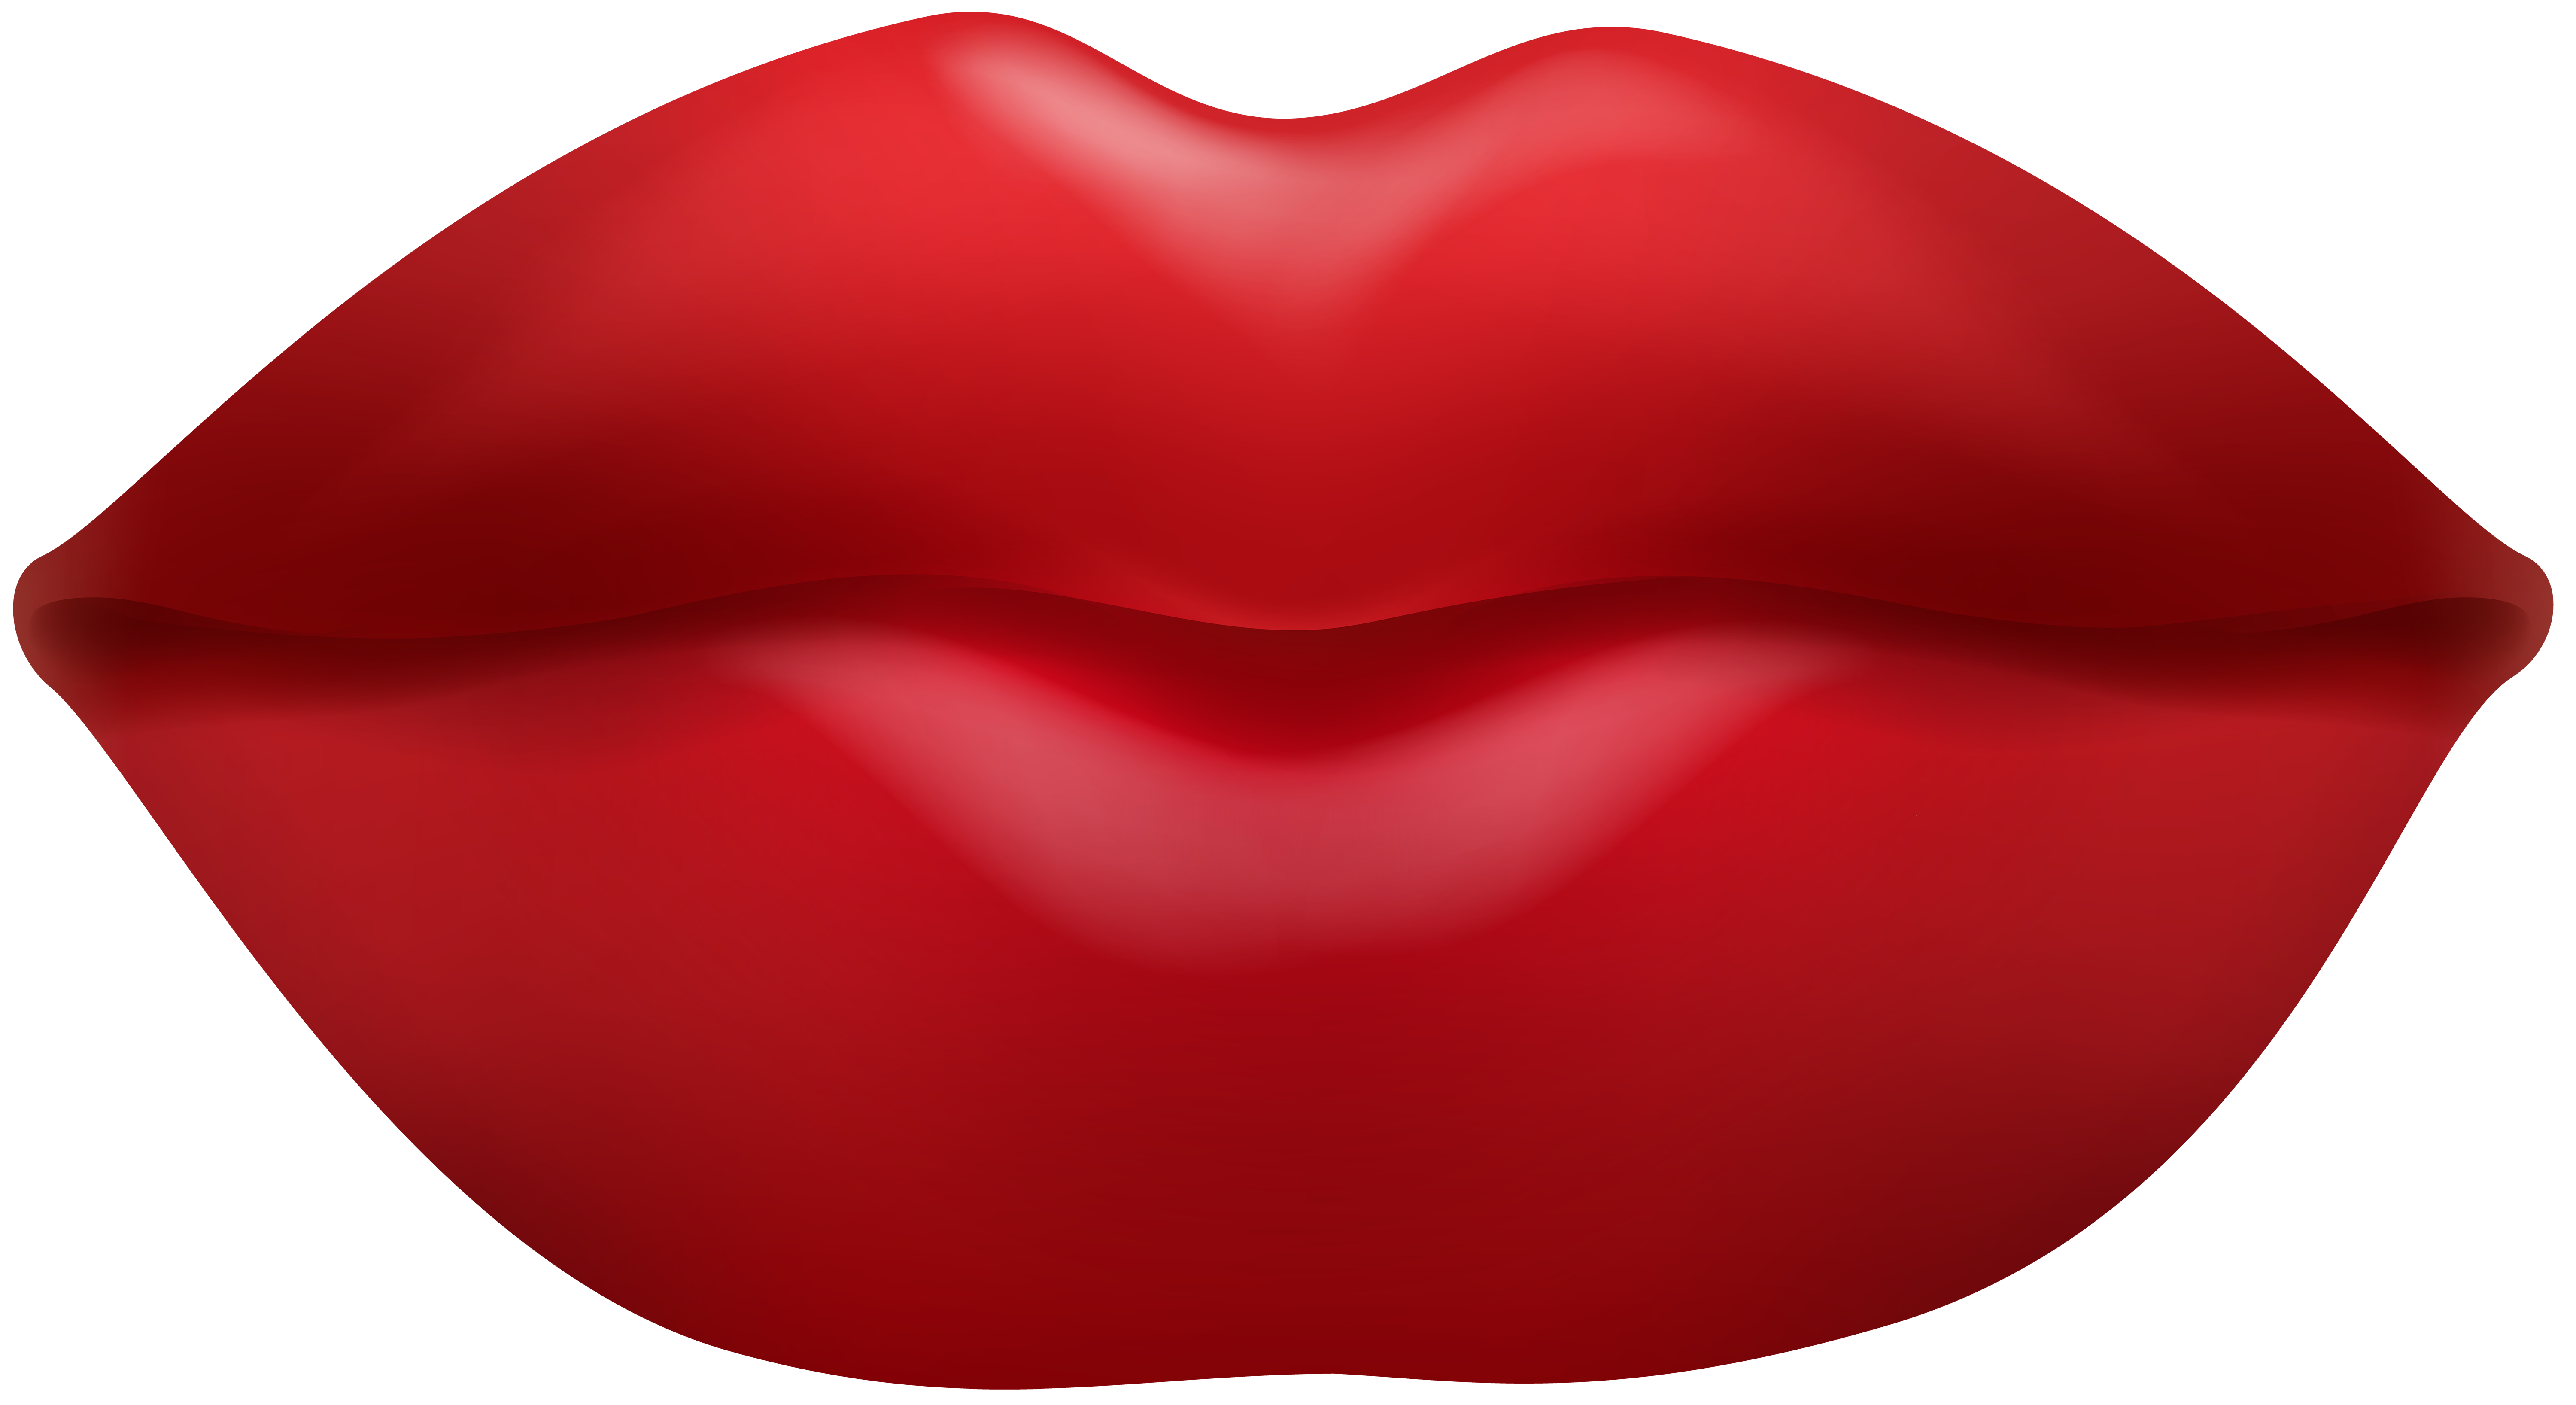 Lip Clip Art Red Lips Png Download 60003272 Free Transparent Lip